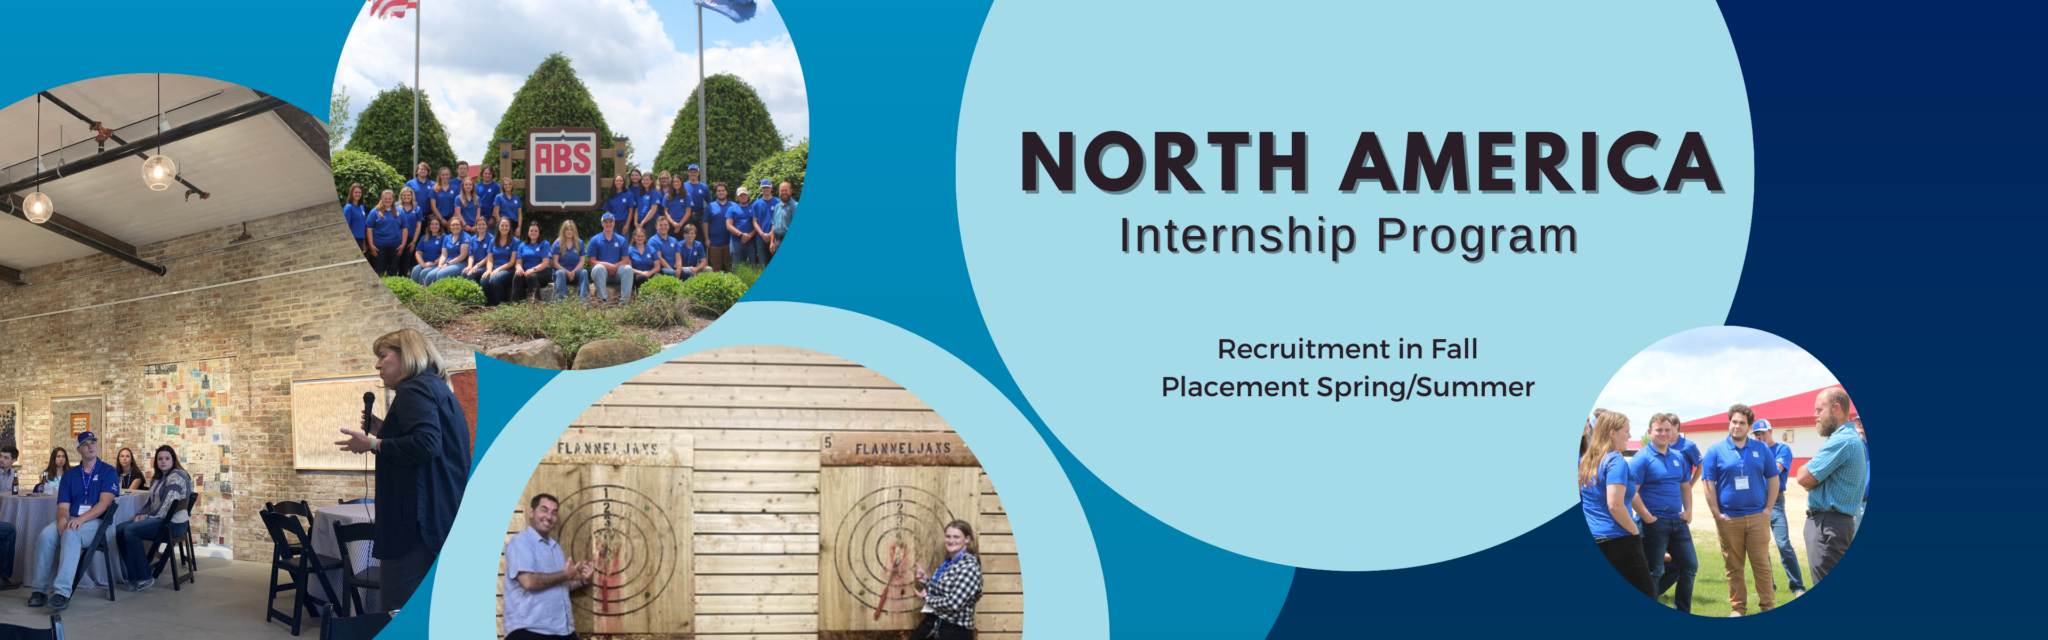 North America Summer Internships ABS Careers